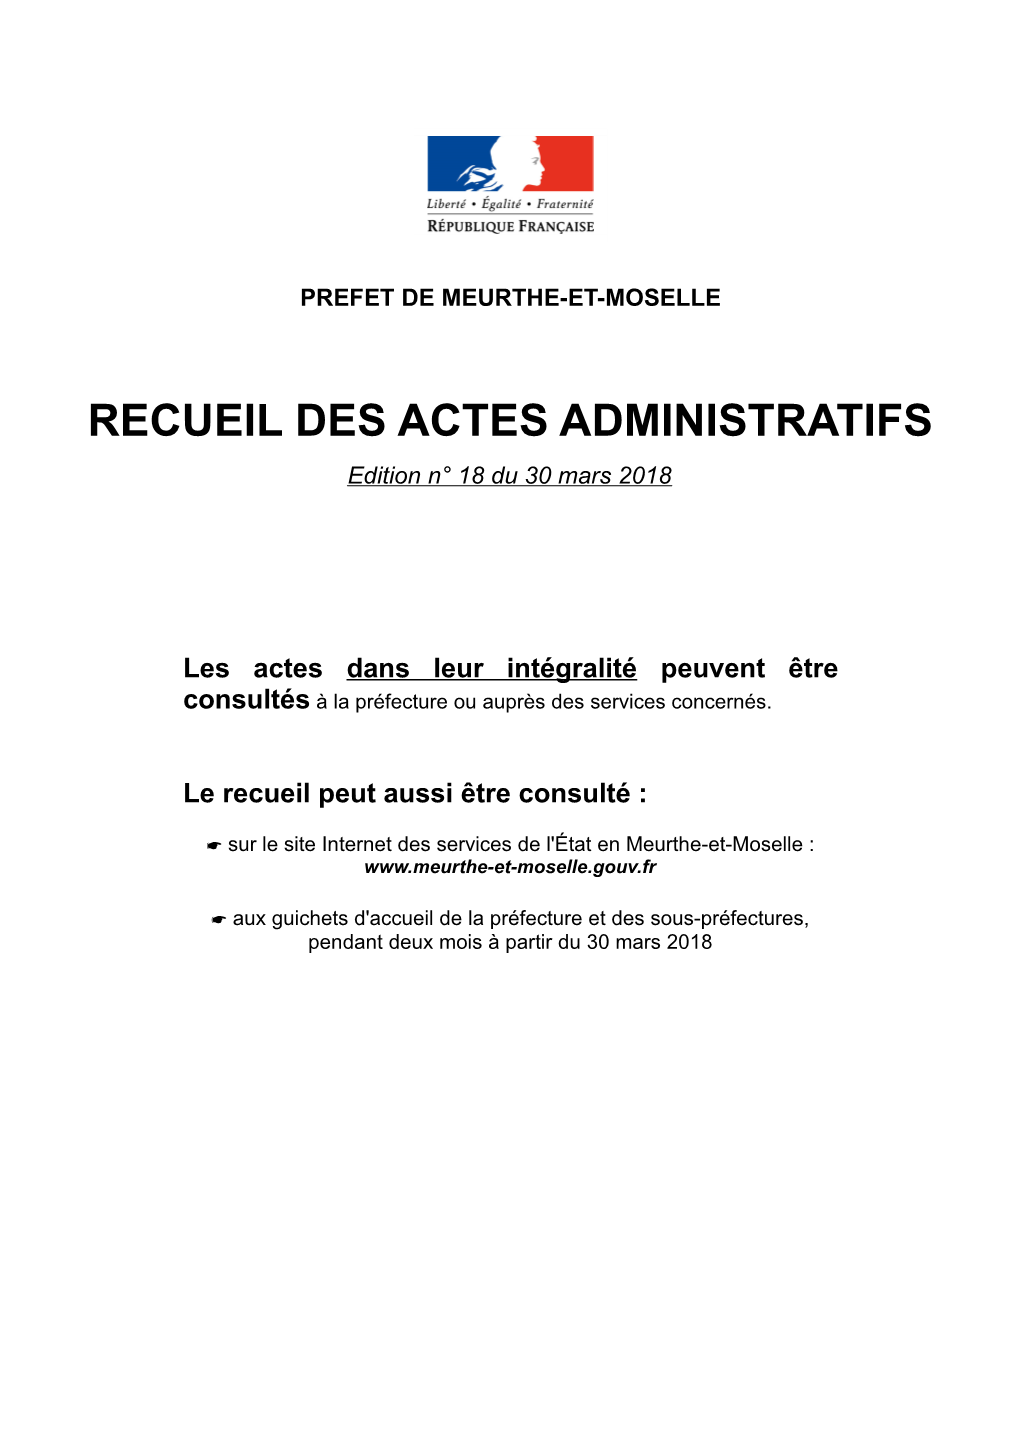 RECUEIL DES ACTES ADMINISTRATIFS Edition N° 18 Du 30 Mars 2018